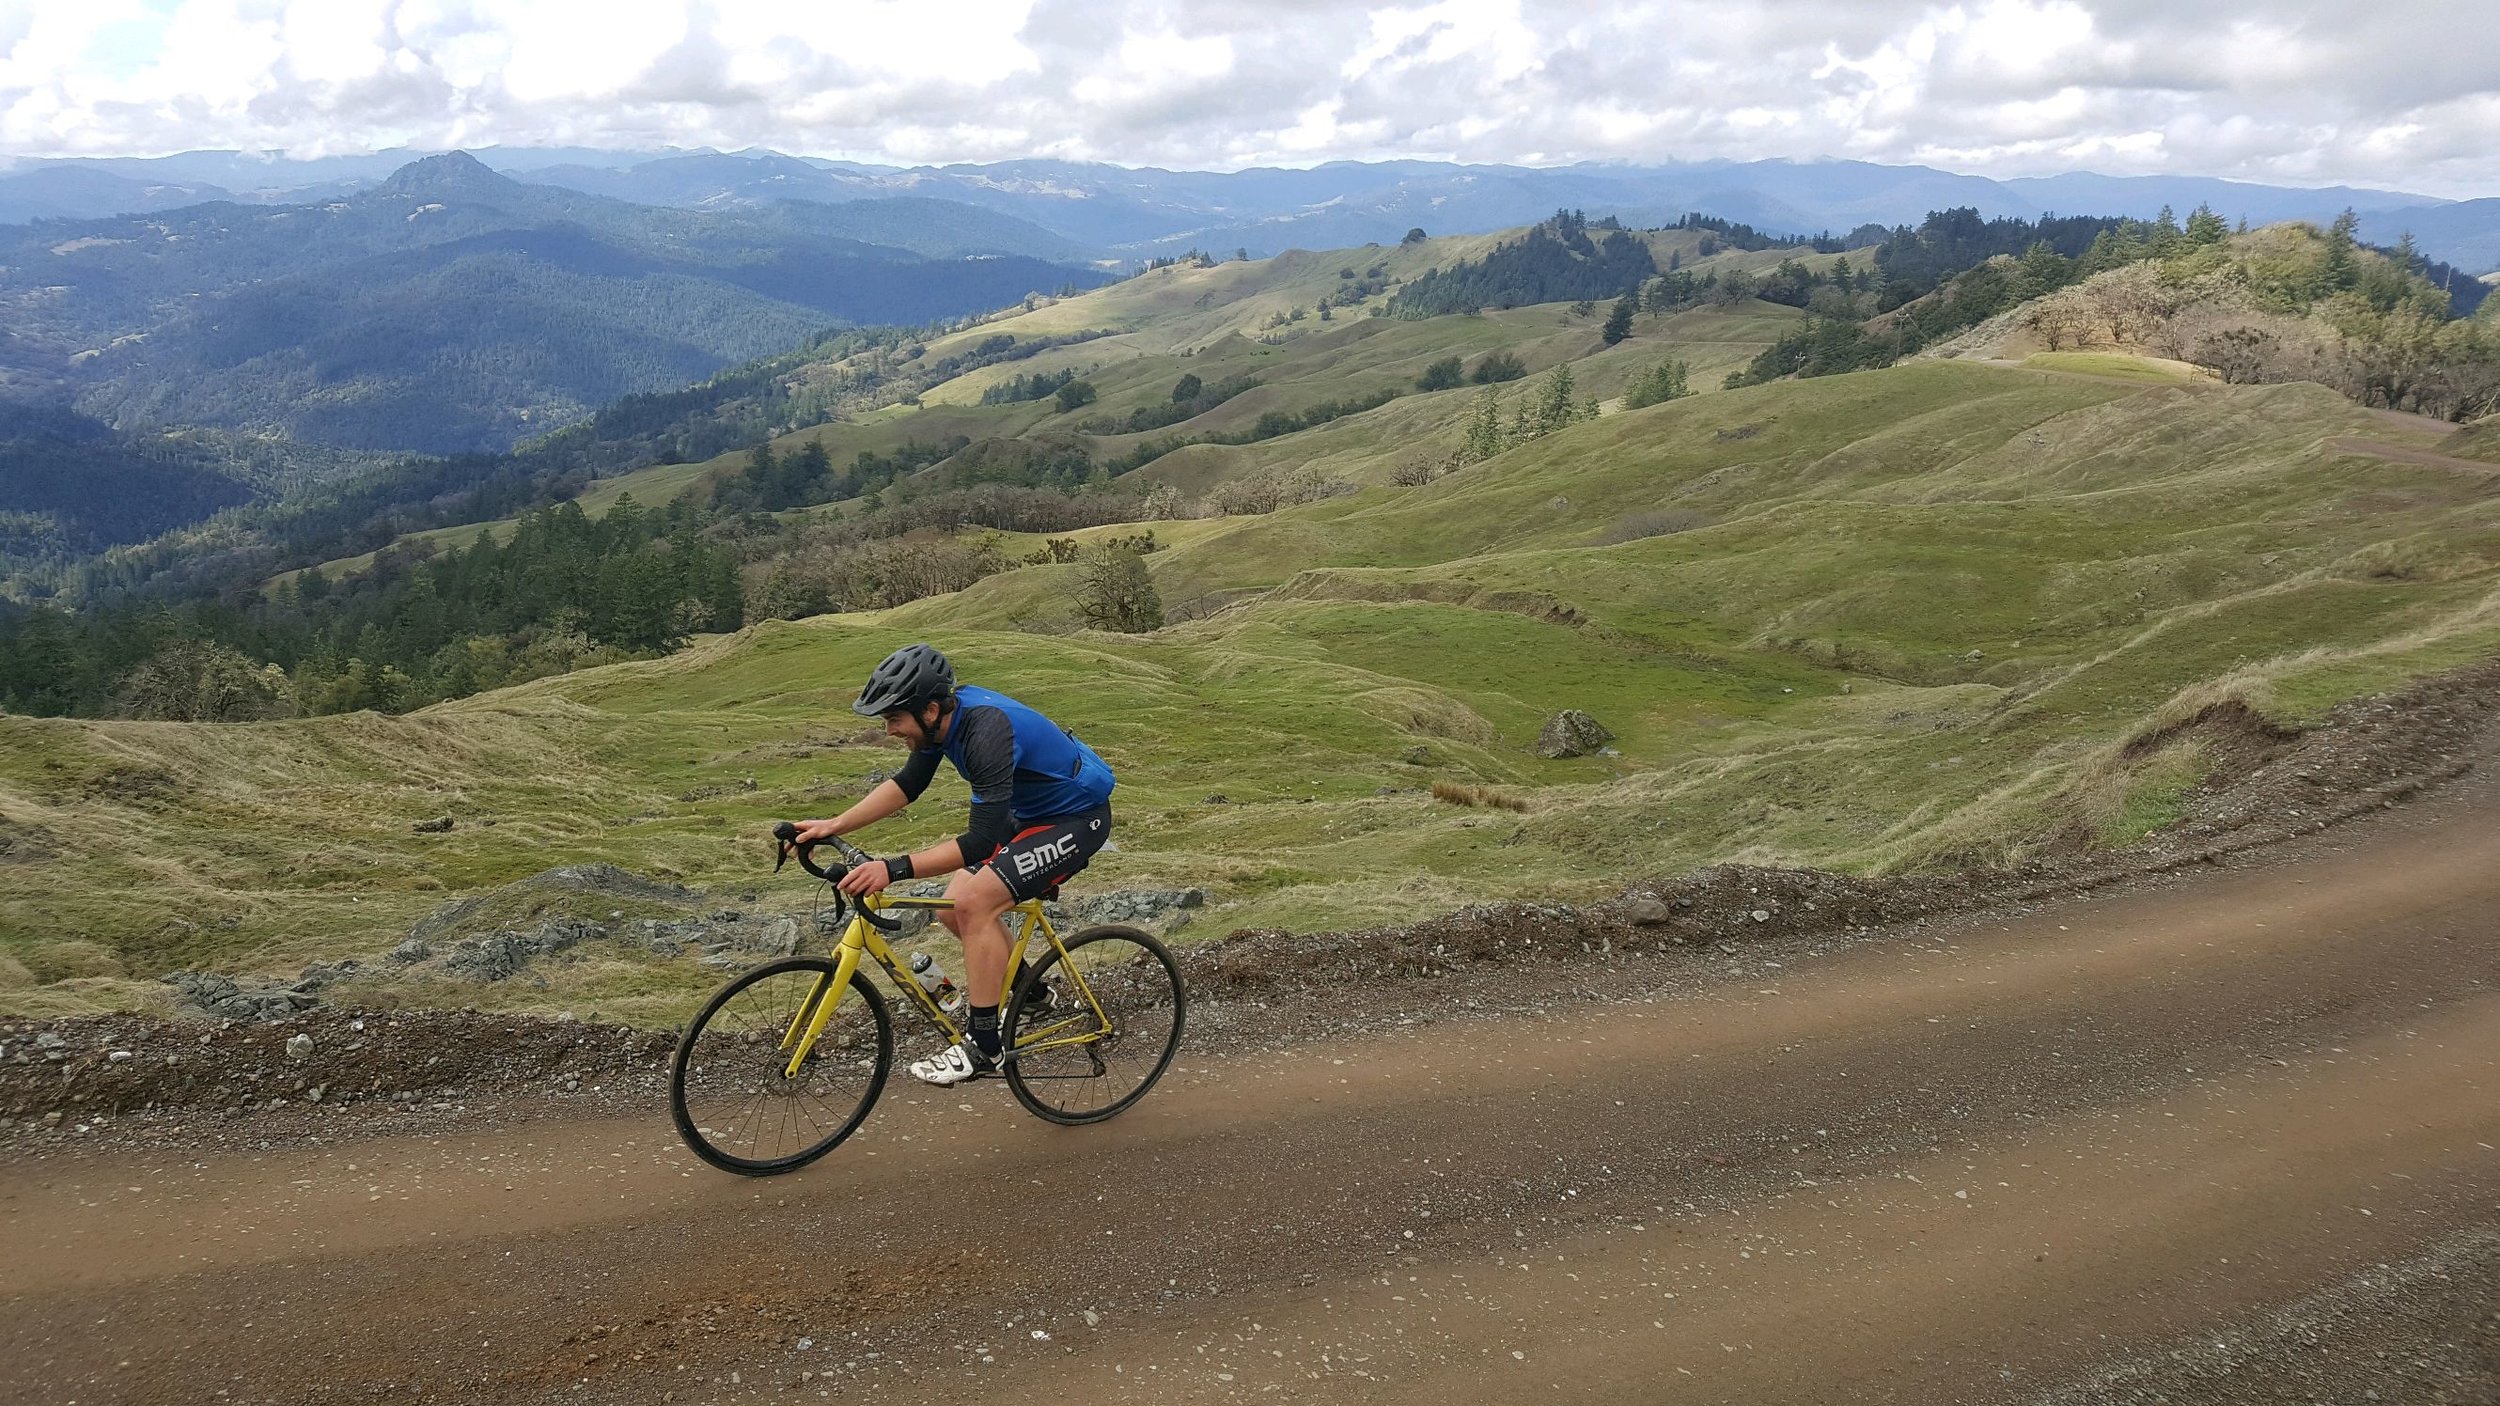 CUSTOM YETI — Redwood Coast Mountain Bike Association